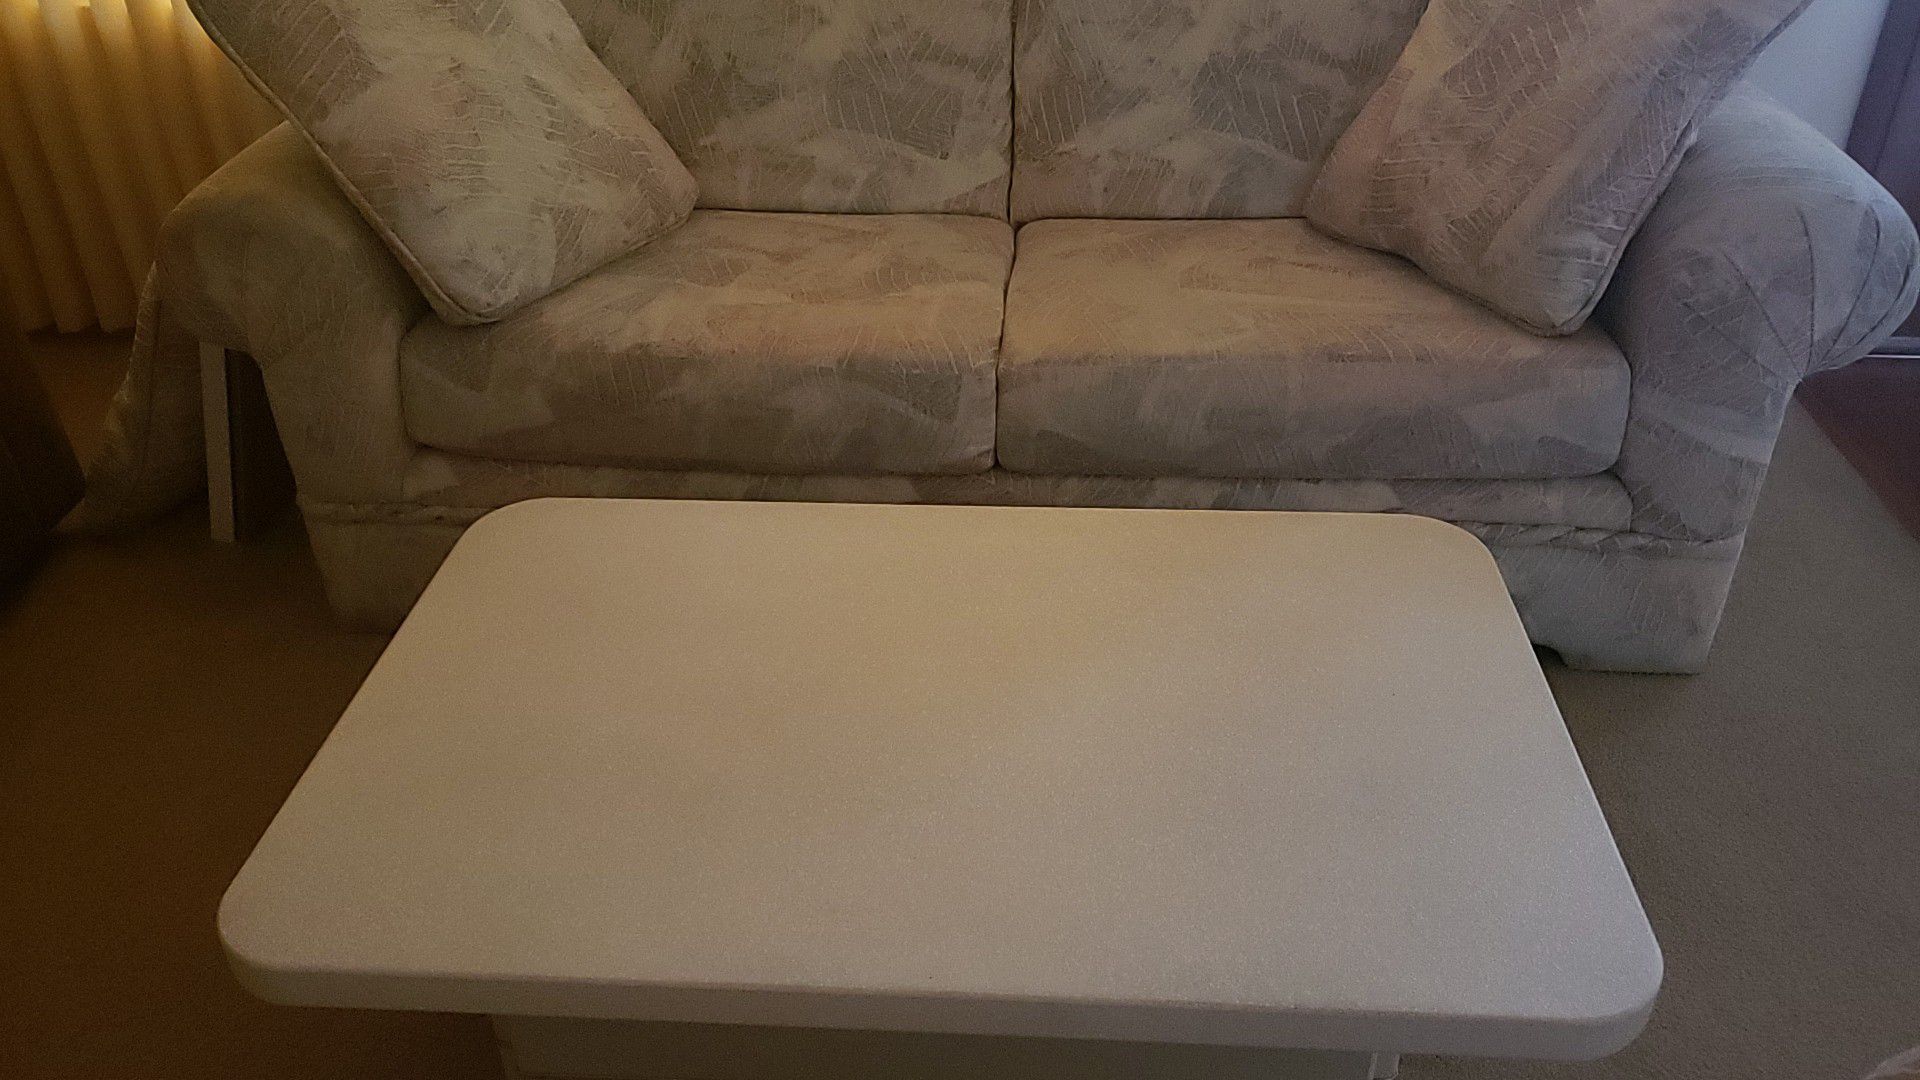 Sofa/table (Free) - need to pickup